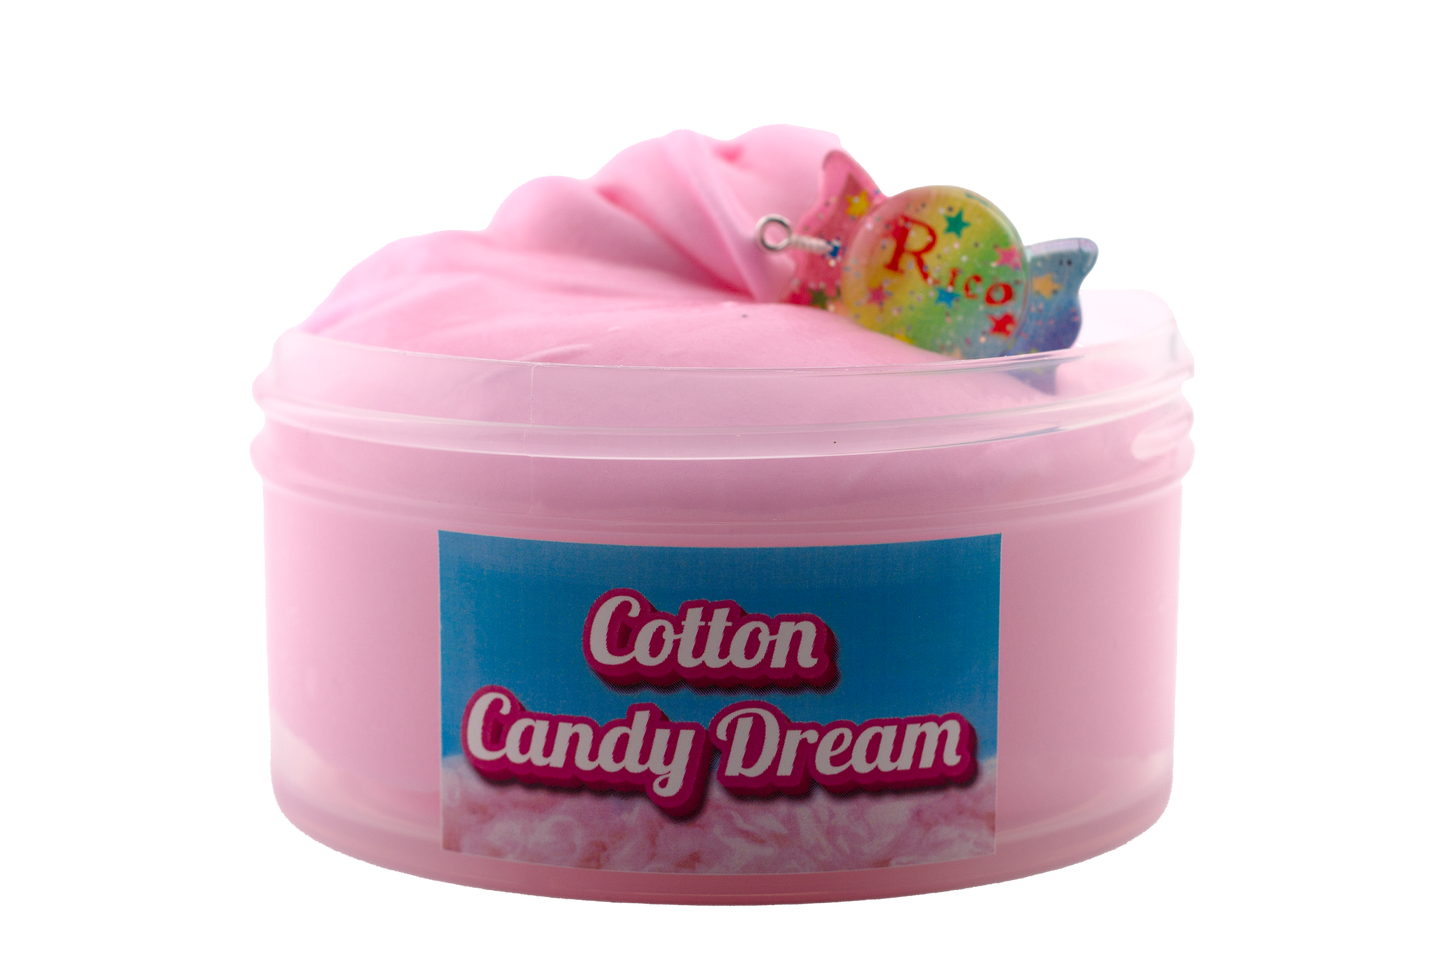 Cotton Candy Dream